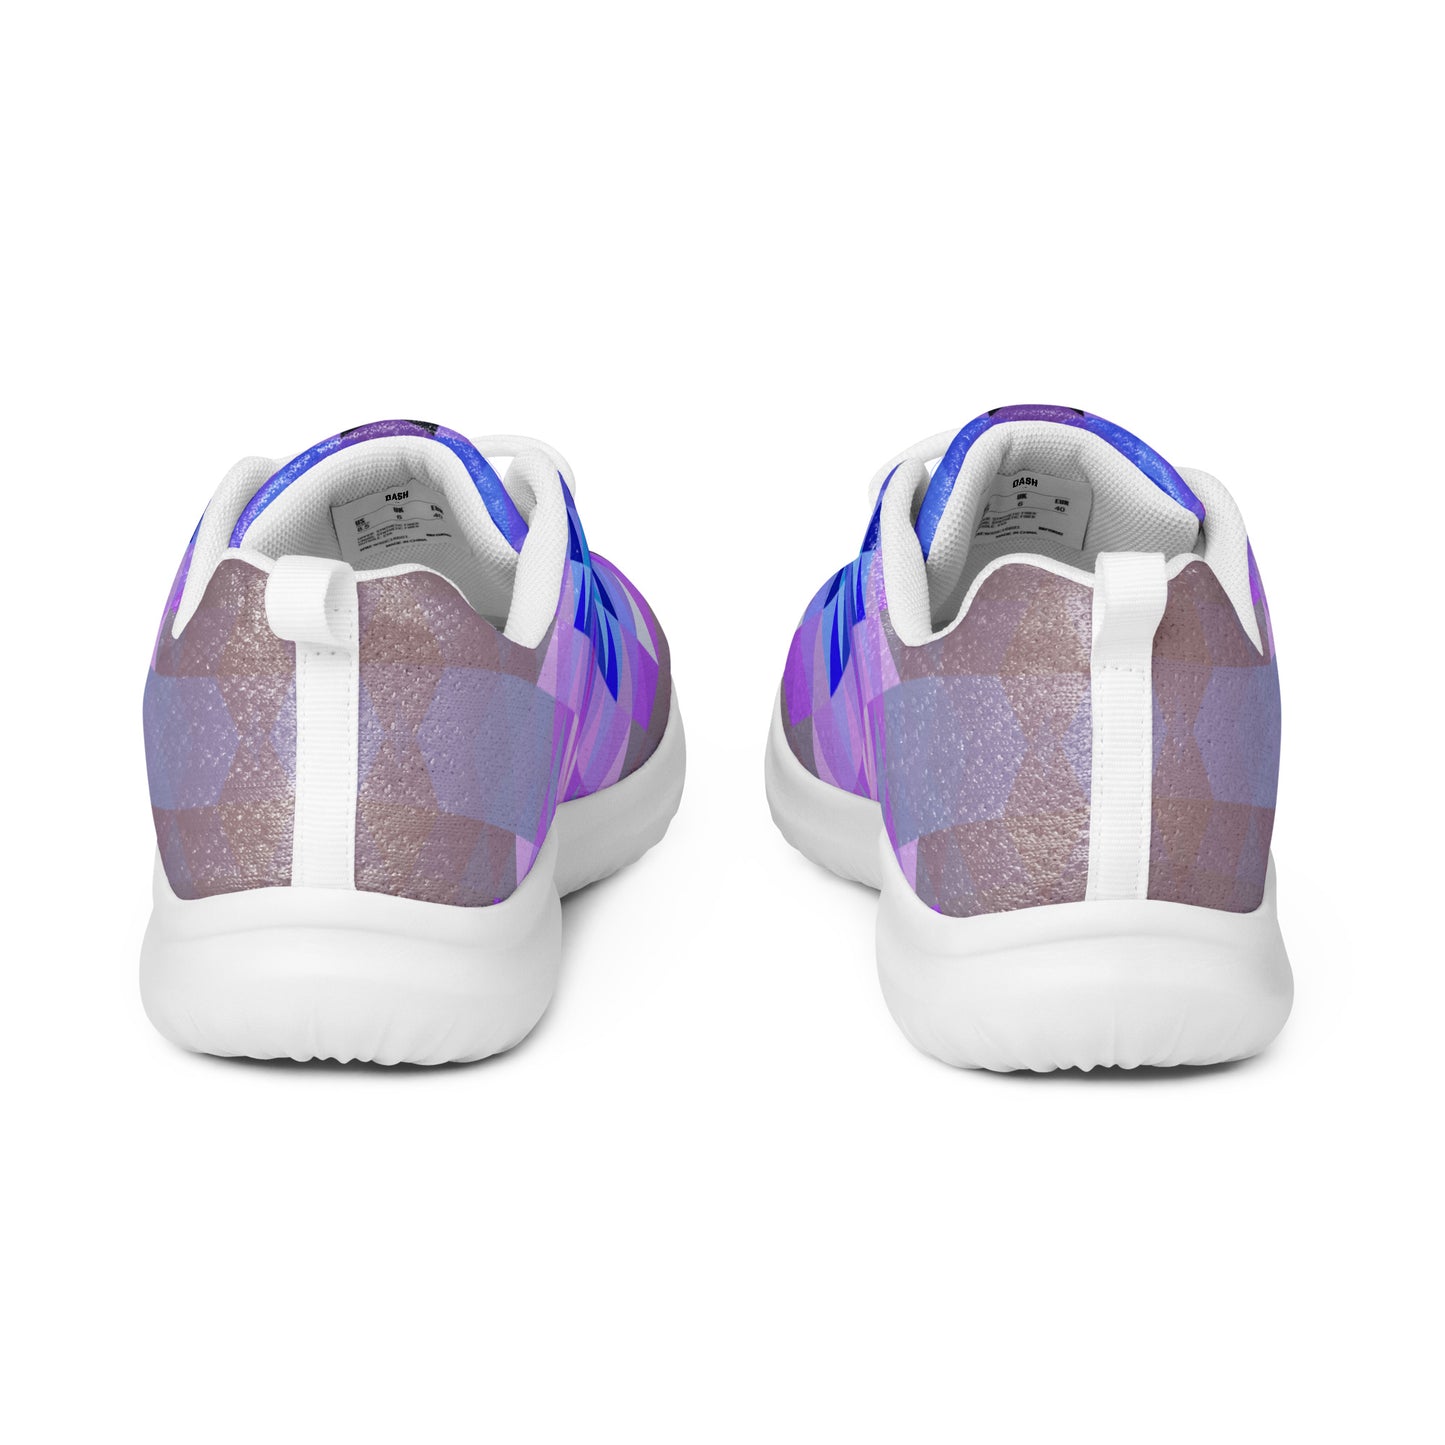 DASH Geo Purple Men’s Athletic Shoes Lightweight Breathable Design by IOBI Original Apparel